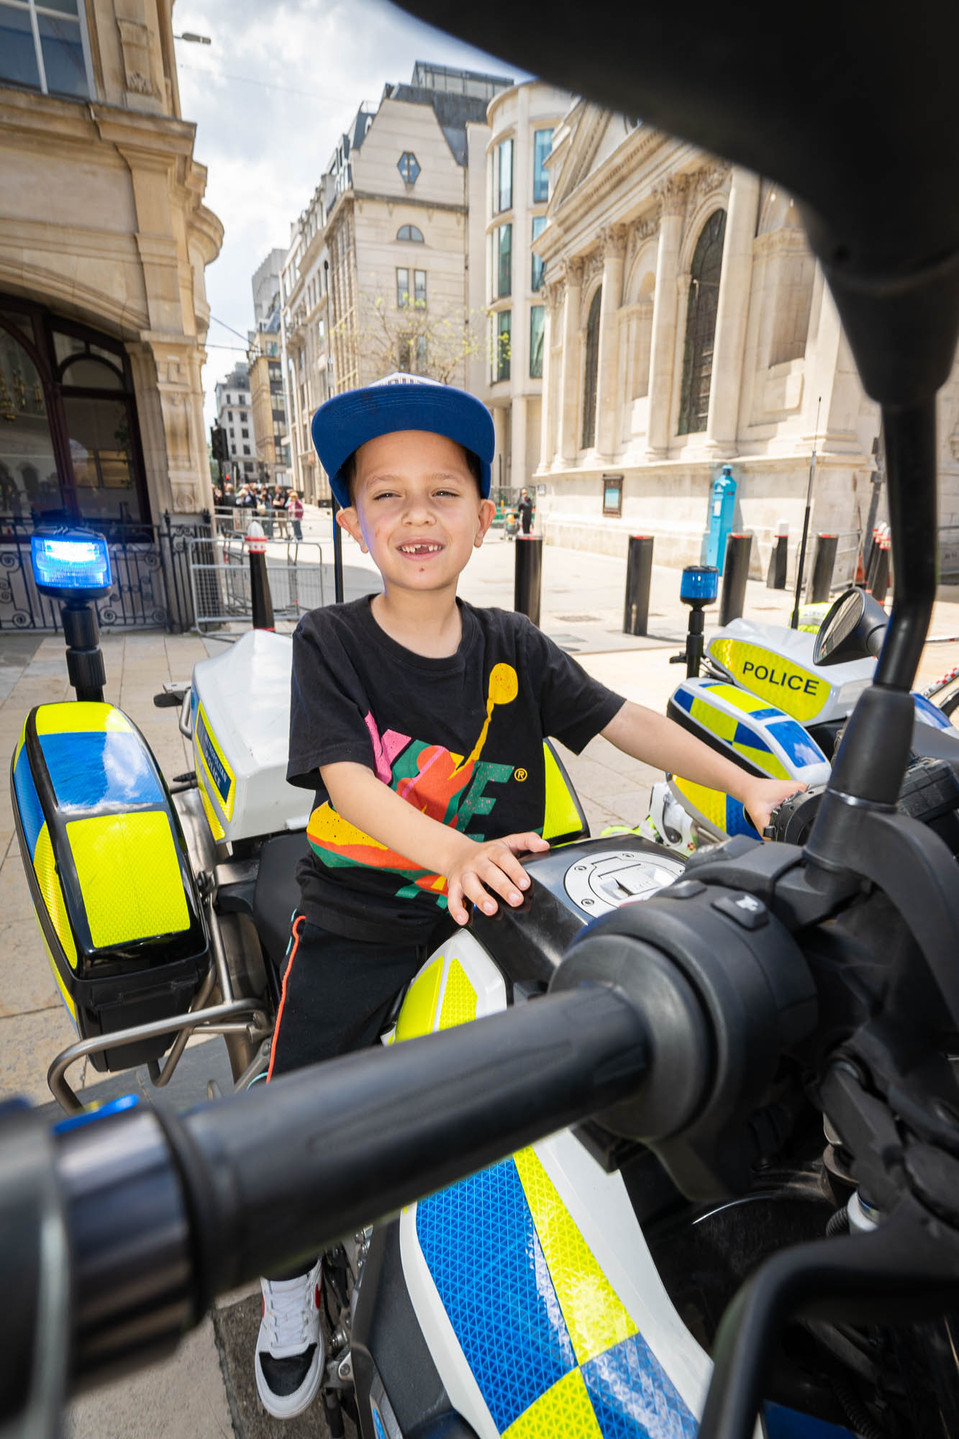 Child on a police motorbike